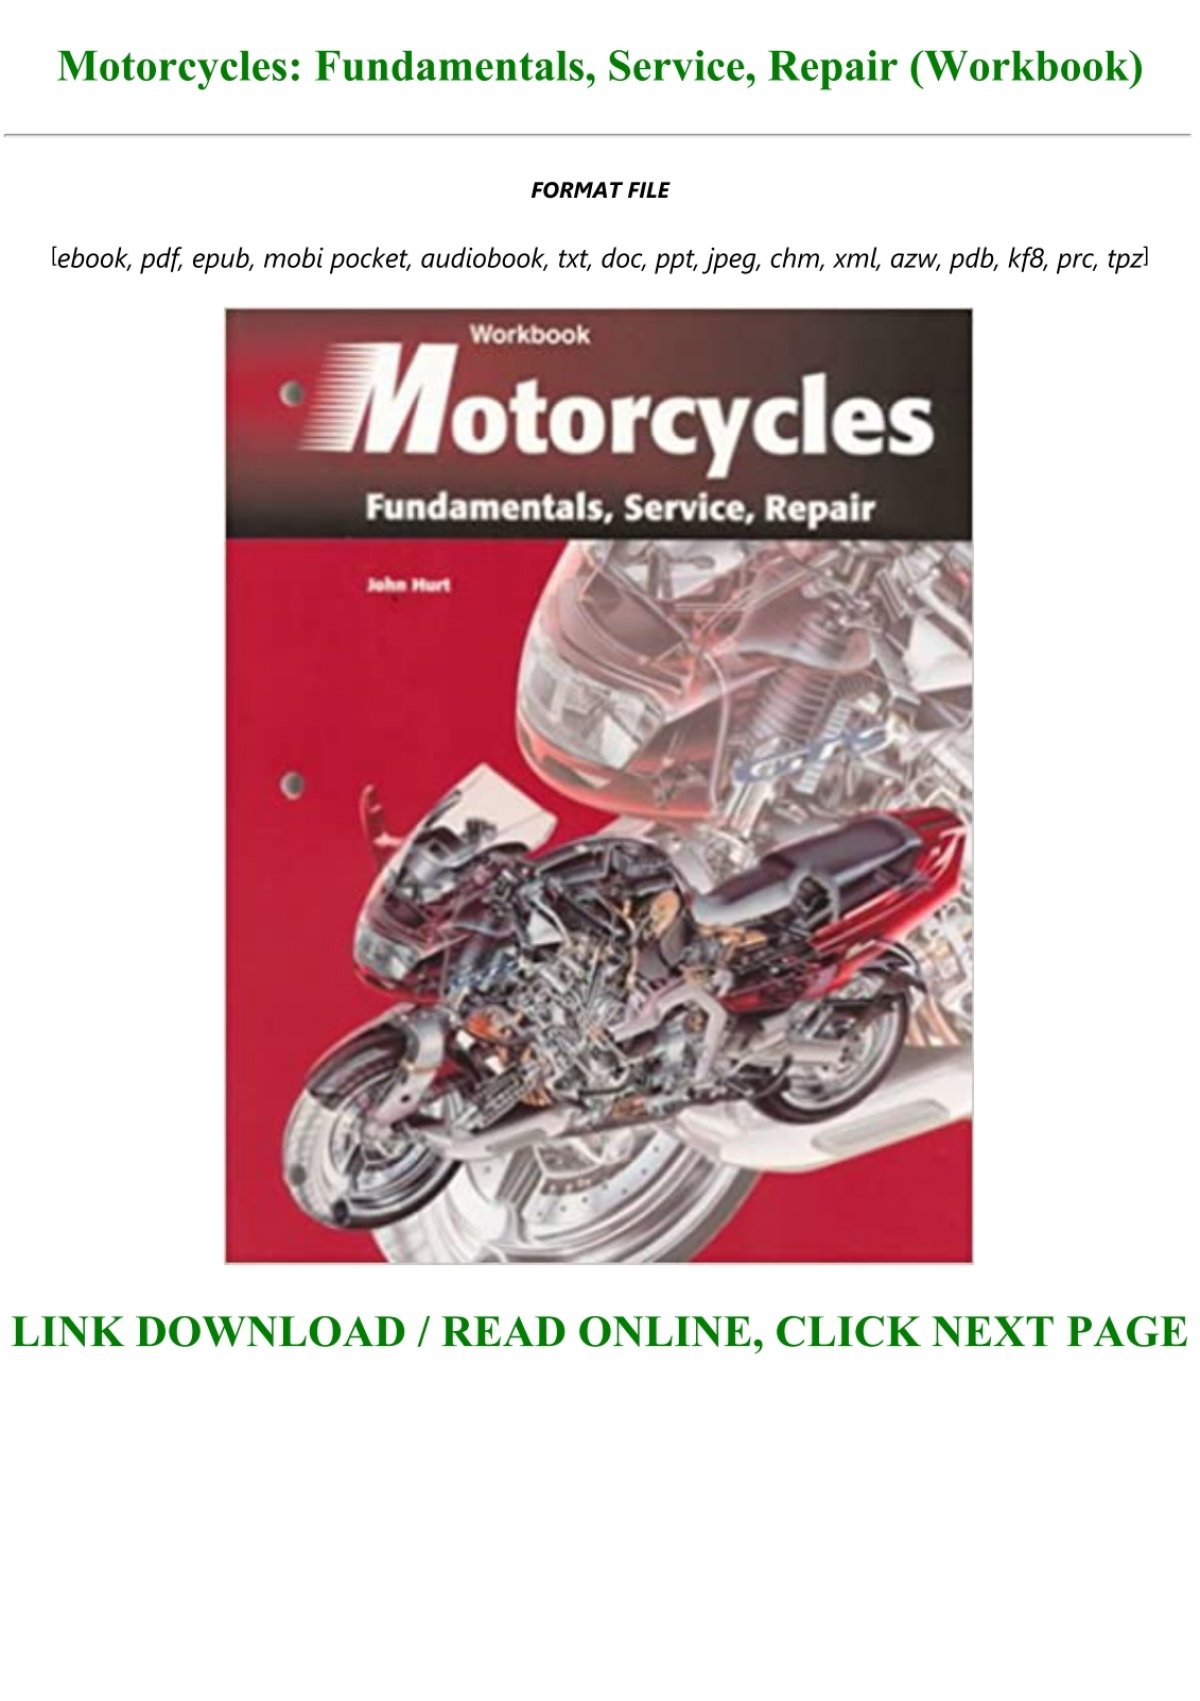 Pdf Download Motorcycles Fundamentals Service Repair Workbook Full Pdf Online